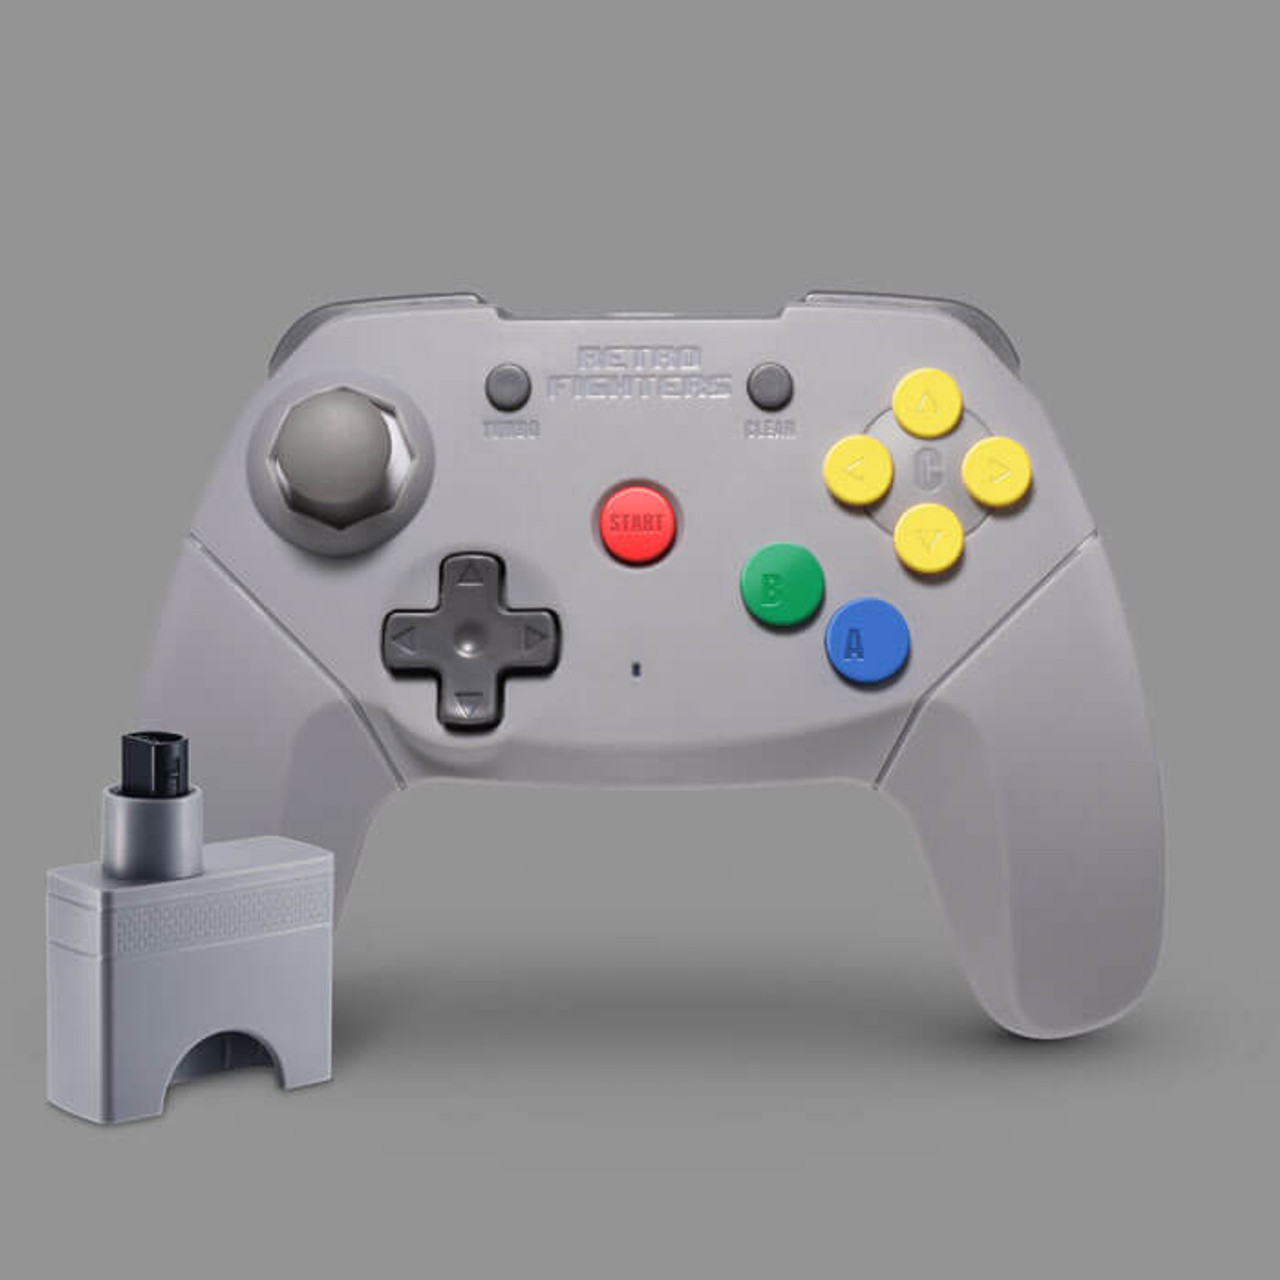 Retro Fighters Brawler64 Wireless Nintendo Switch Controller Online  Bluetooth NSO Edition, Gray